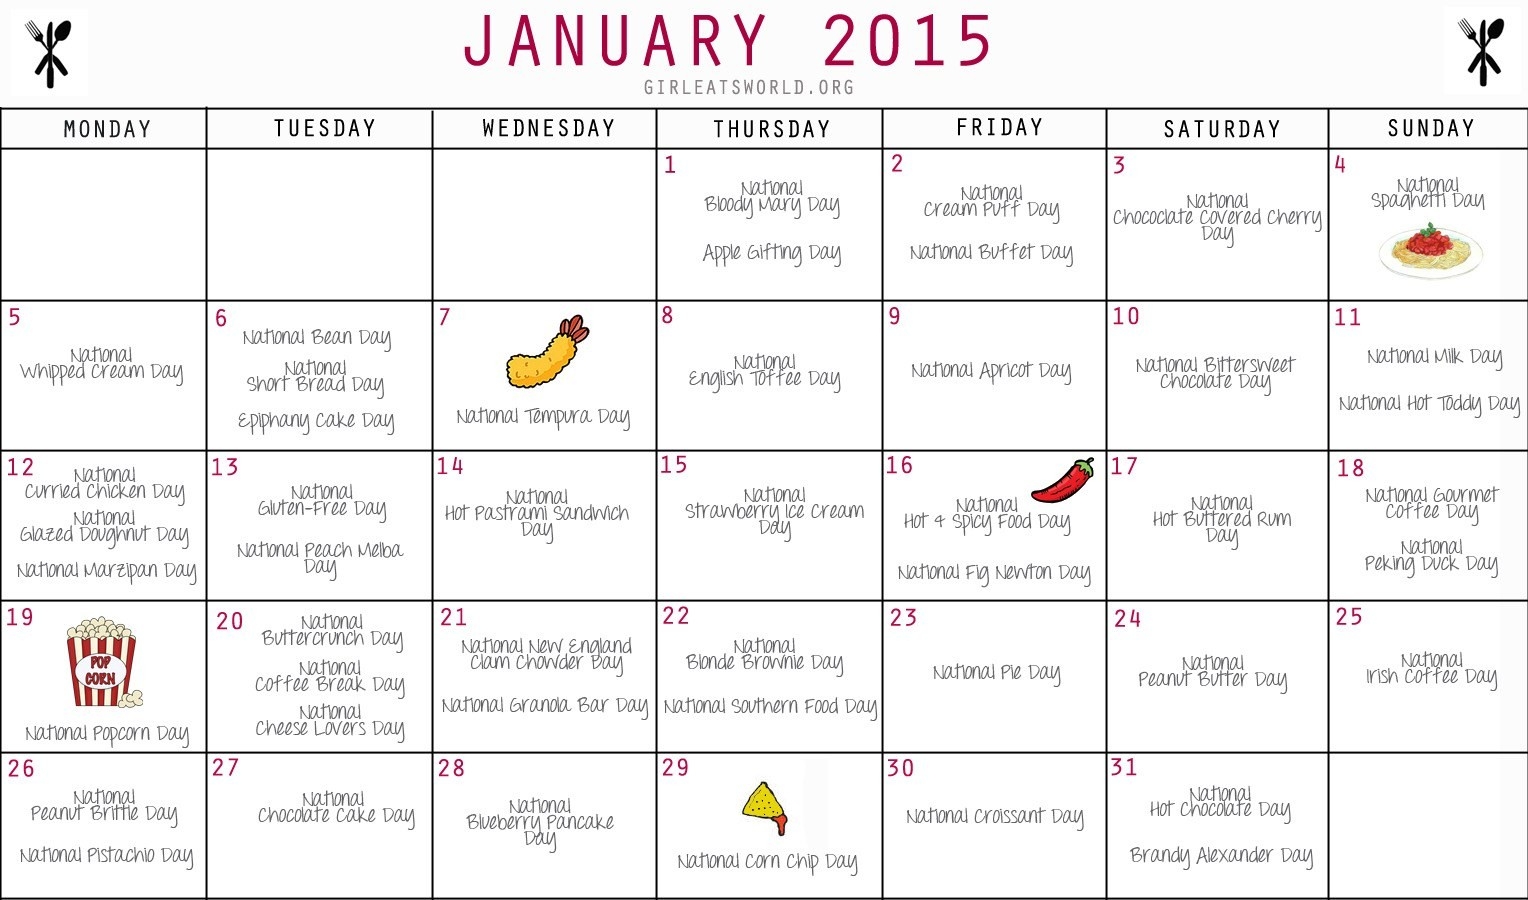 National Food Holidays January 2015 | Girl Eats World-National Food Holidays Us